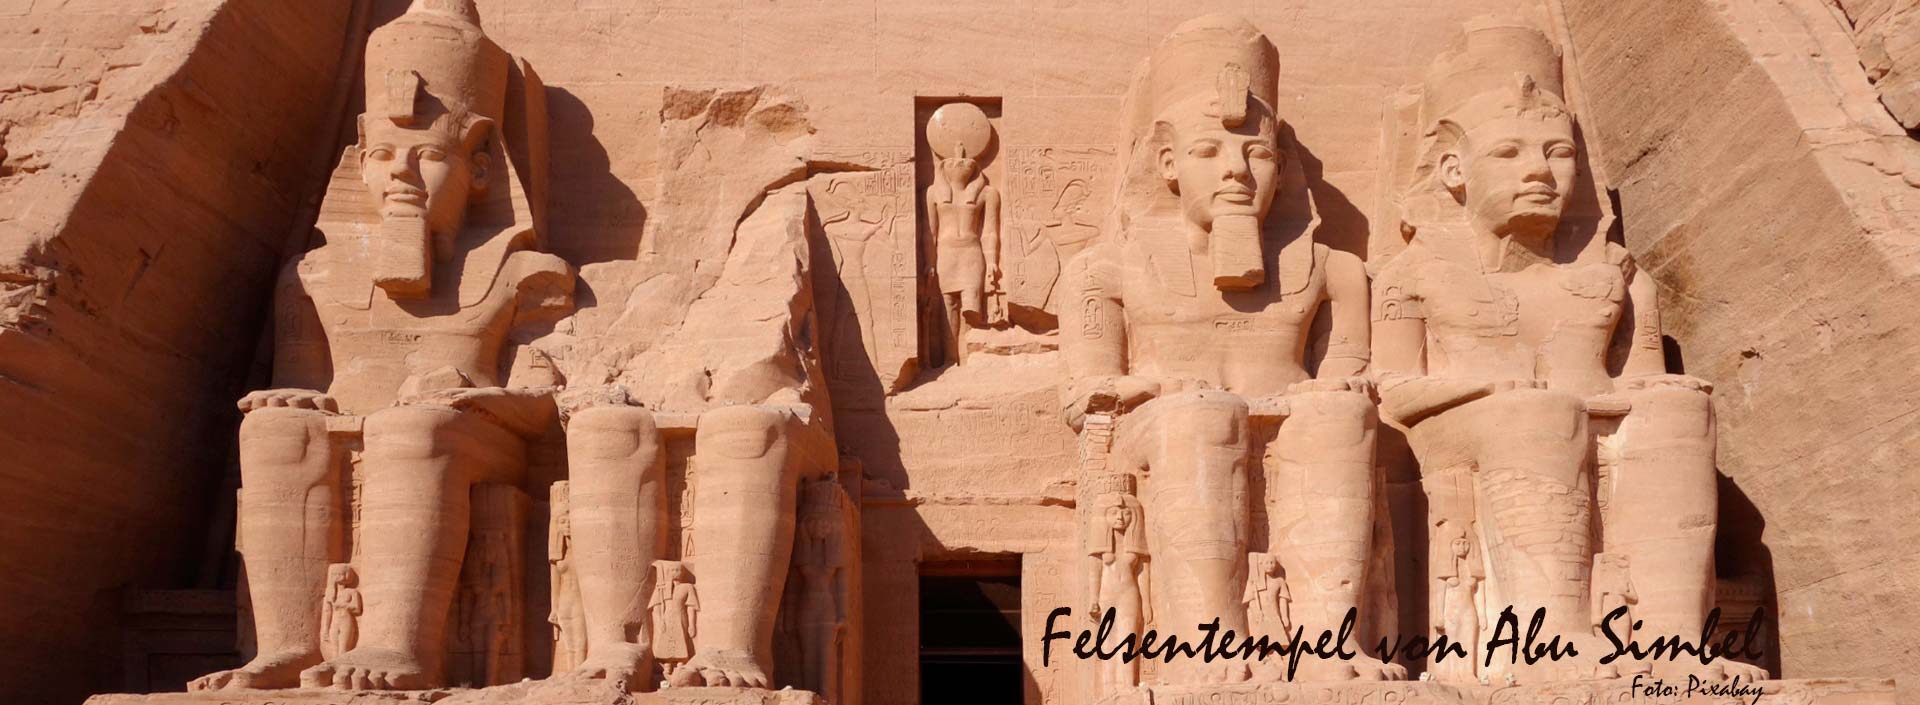 Ägypten, Abu Simbel, Foto: Pixabay